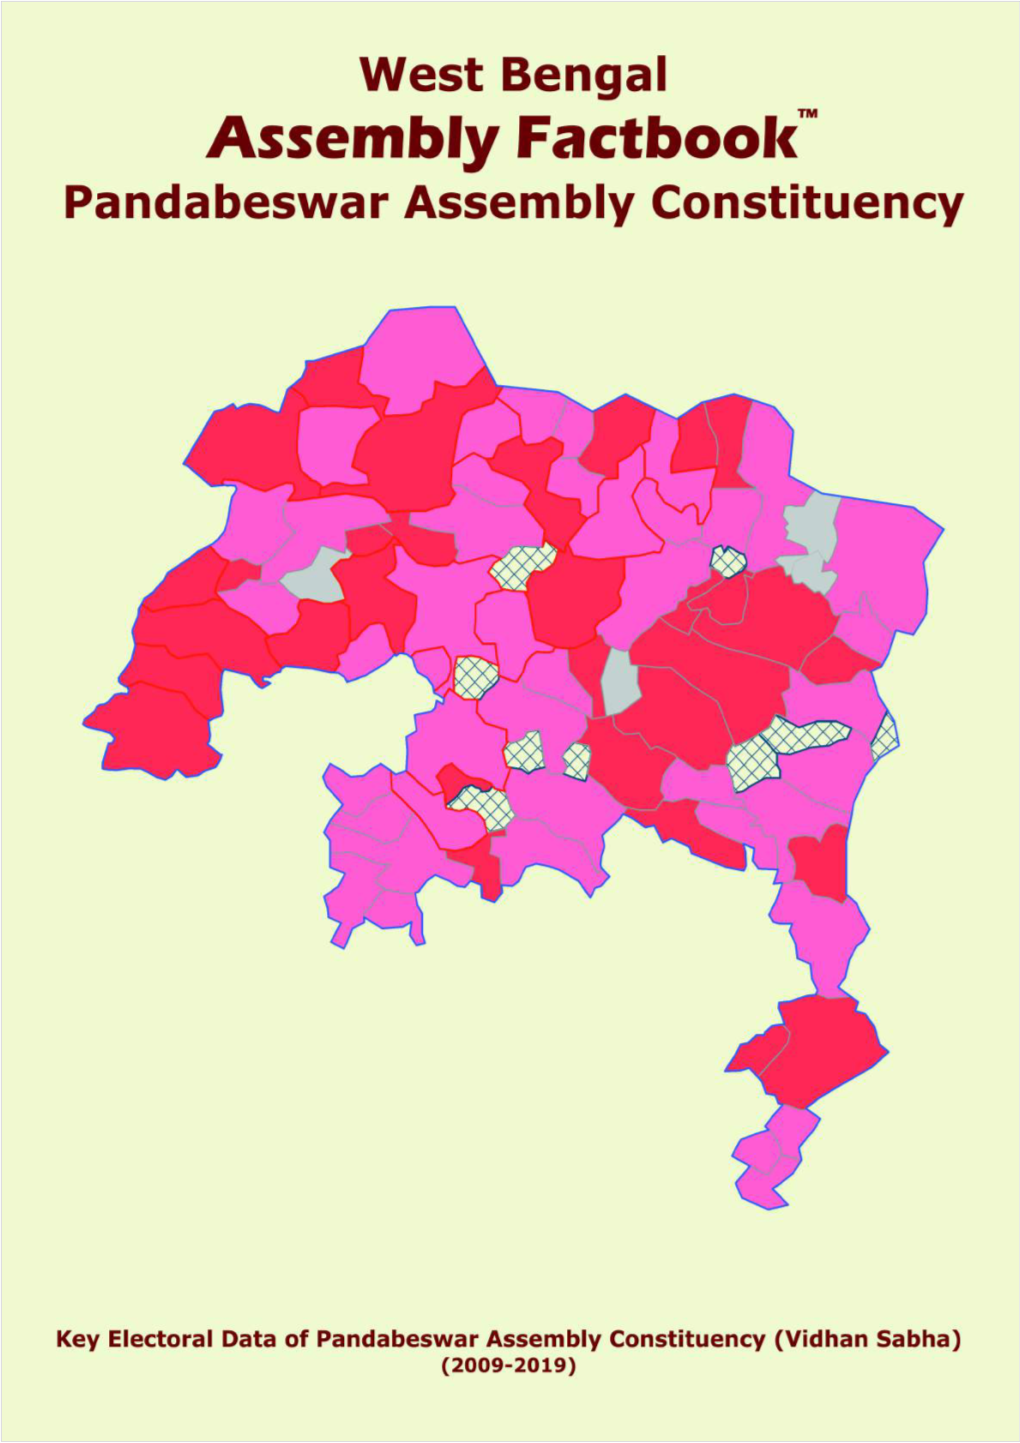 Pandabeswar Assembly West Bengal Factbook